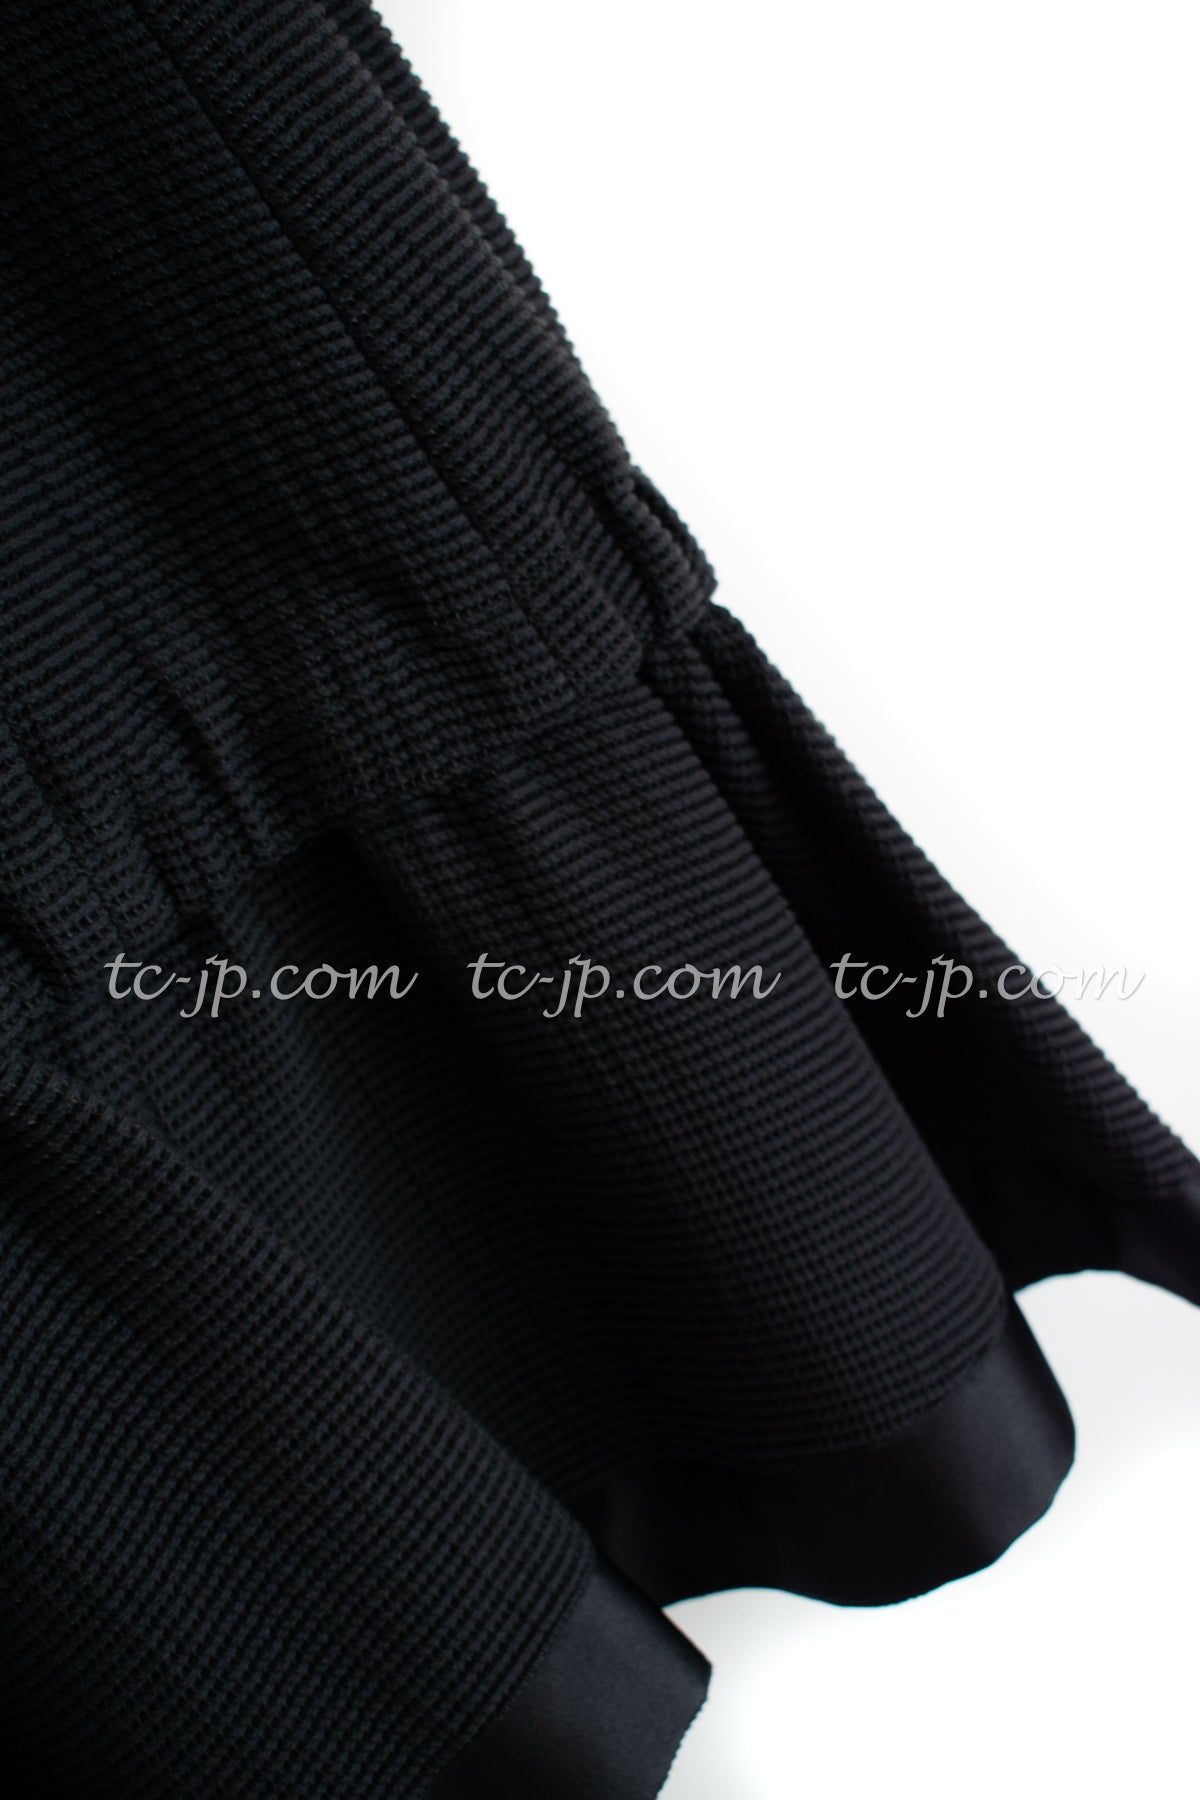 CHANEL 12S Ivory Collar Ribbon Black Dress 40 シャネル アイボリー襟・ブラック・リボン・ワンピース